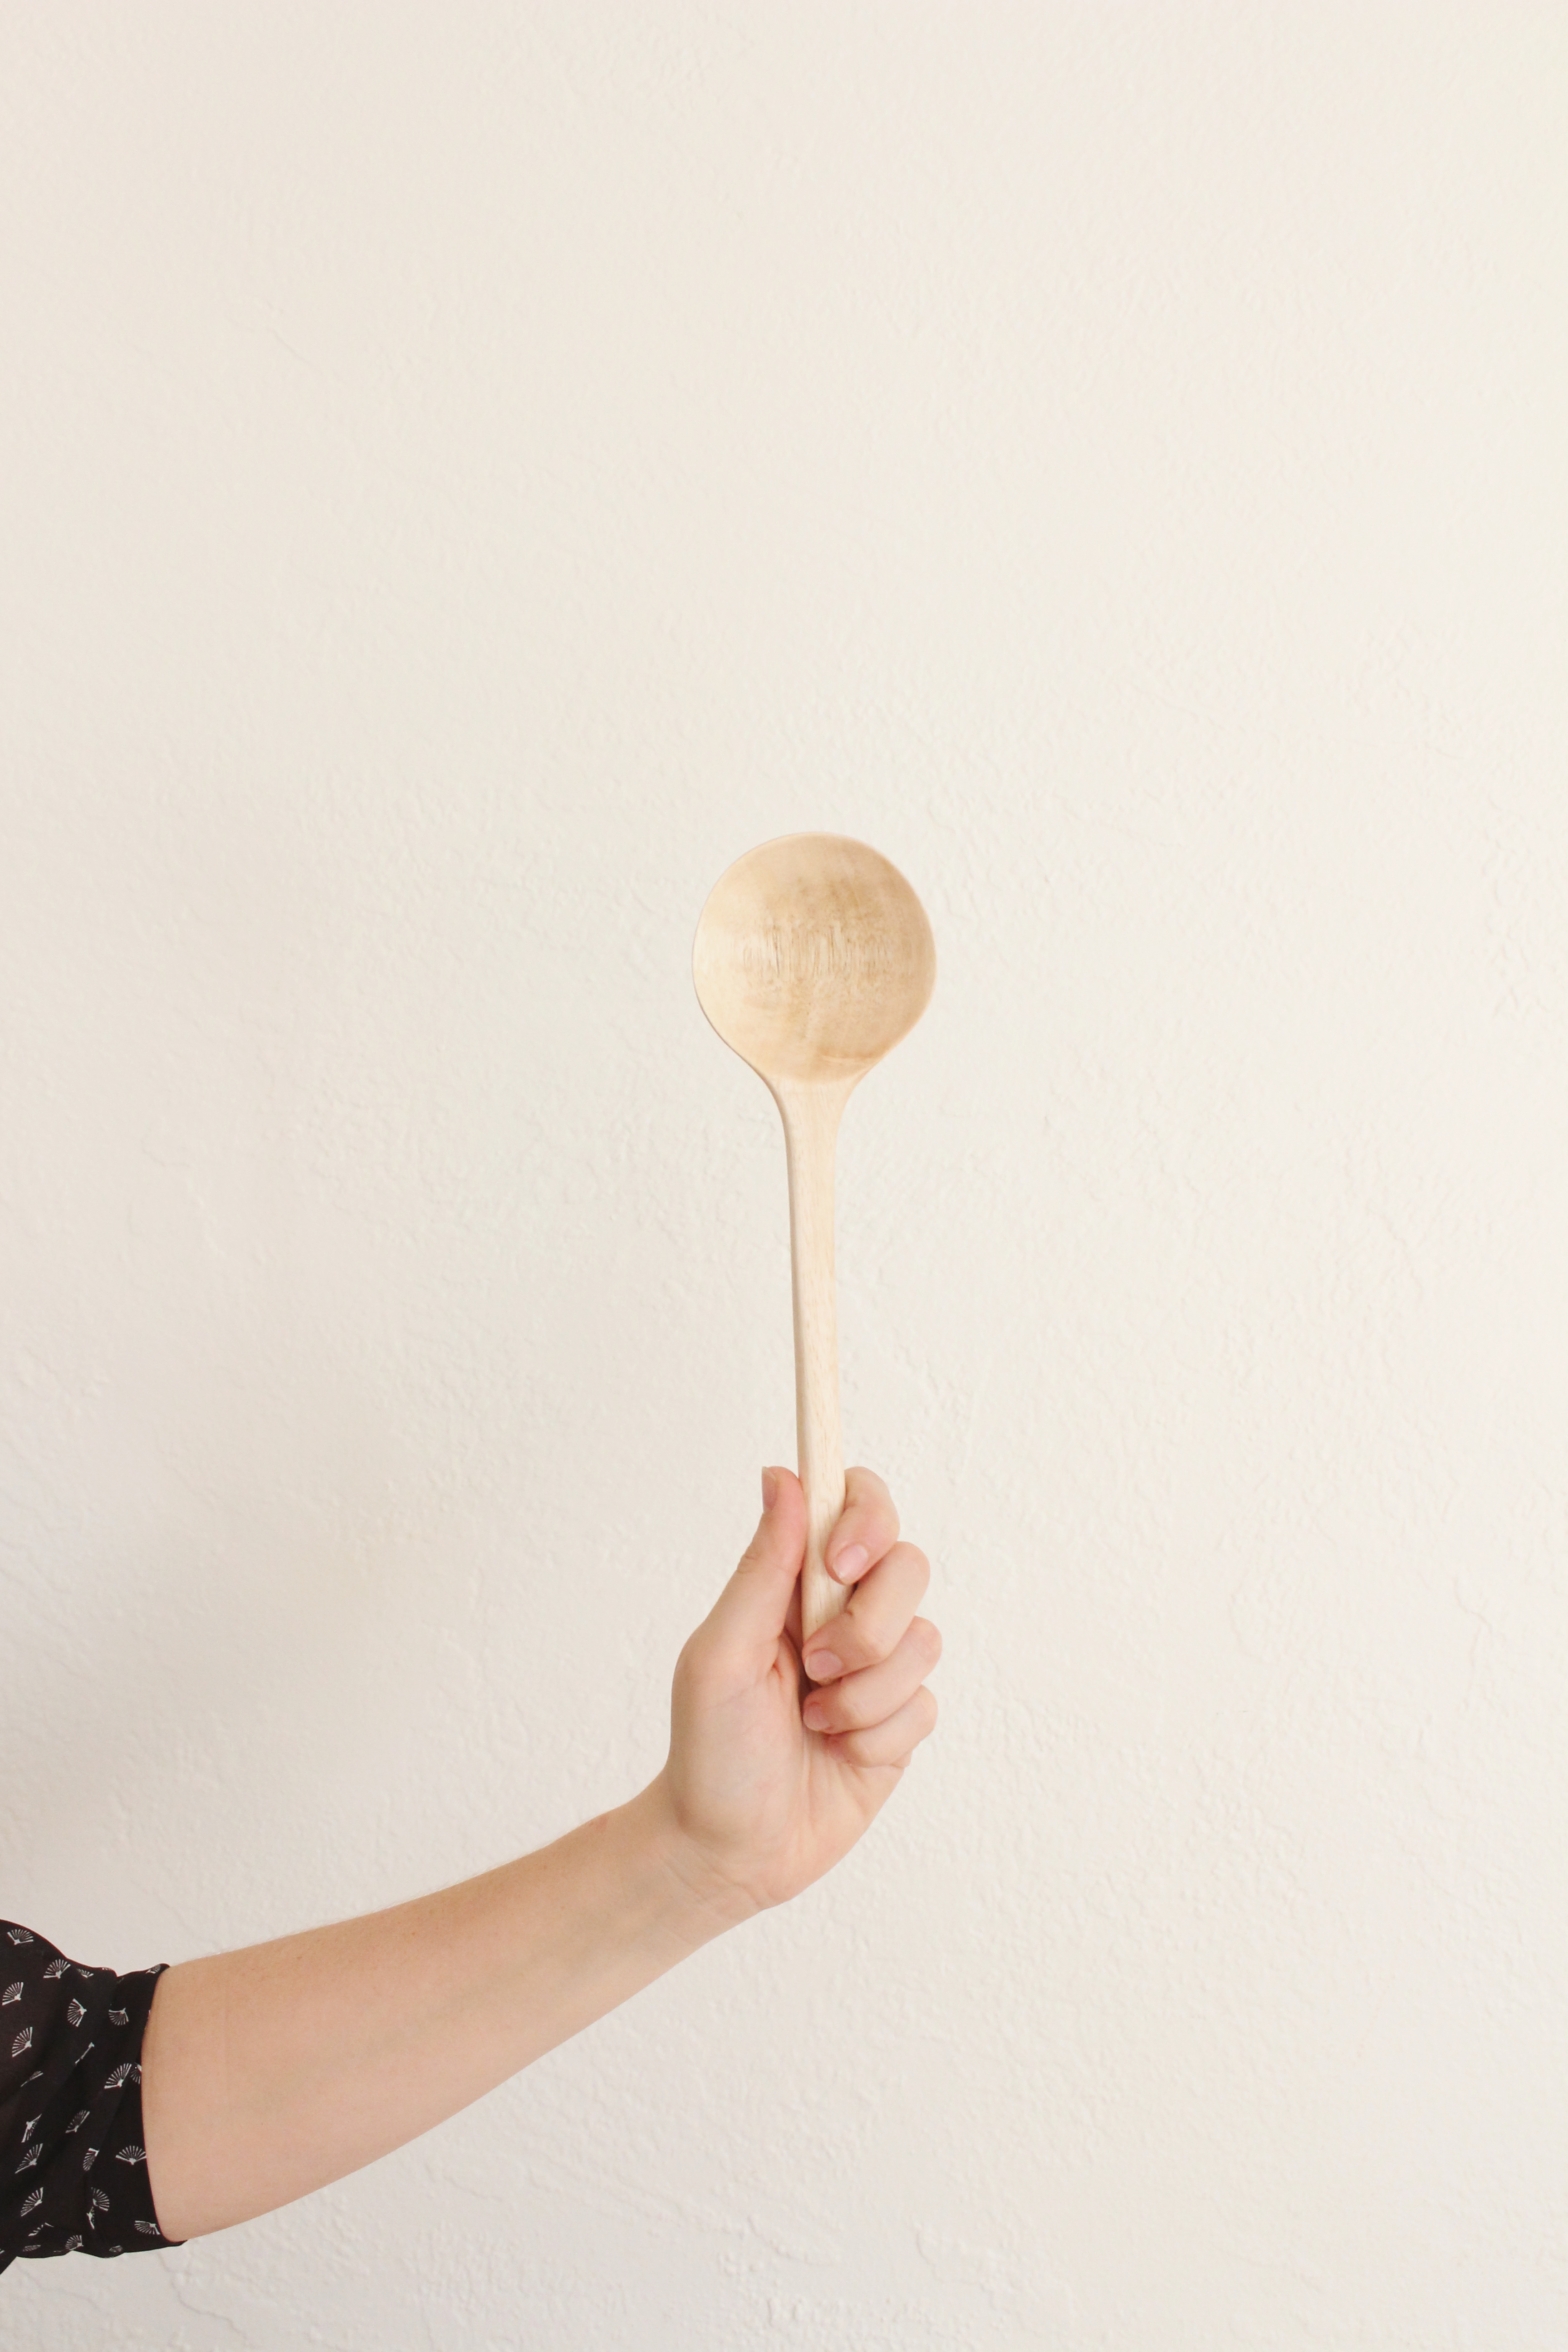 mango wood spoon